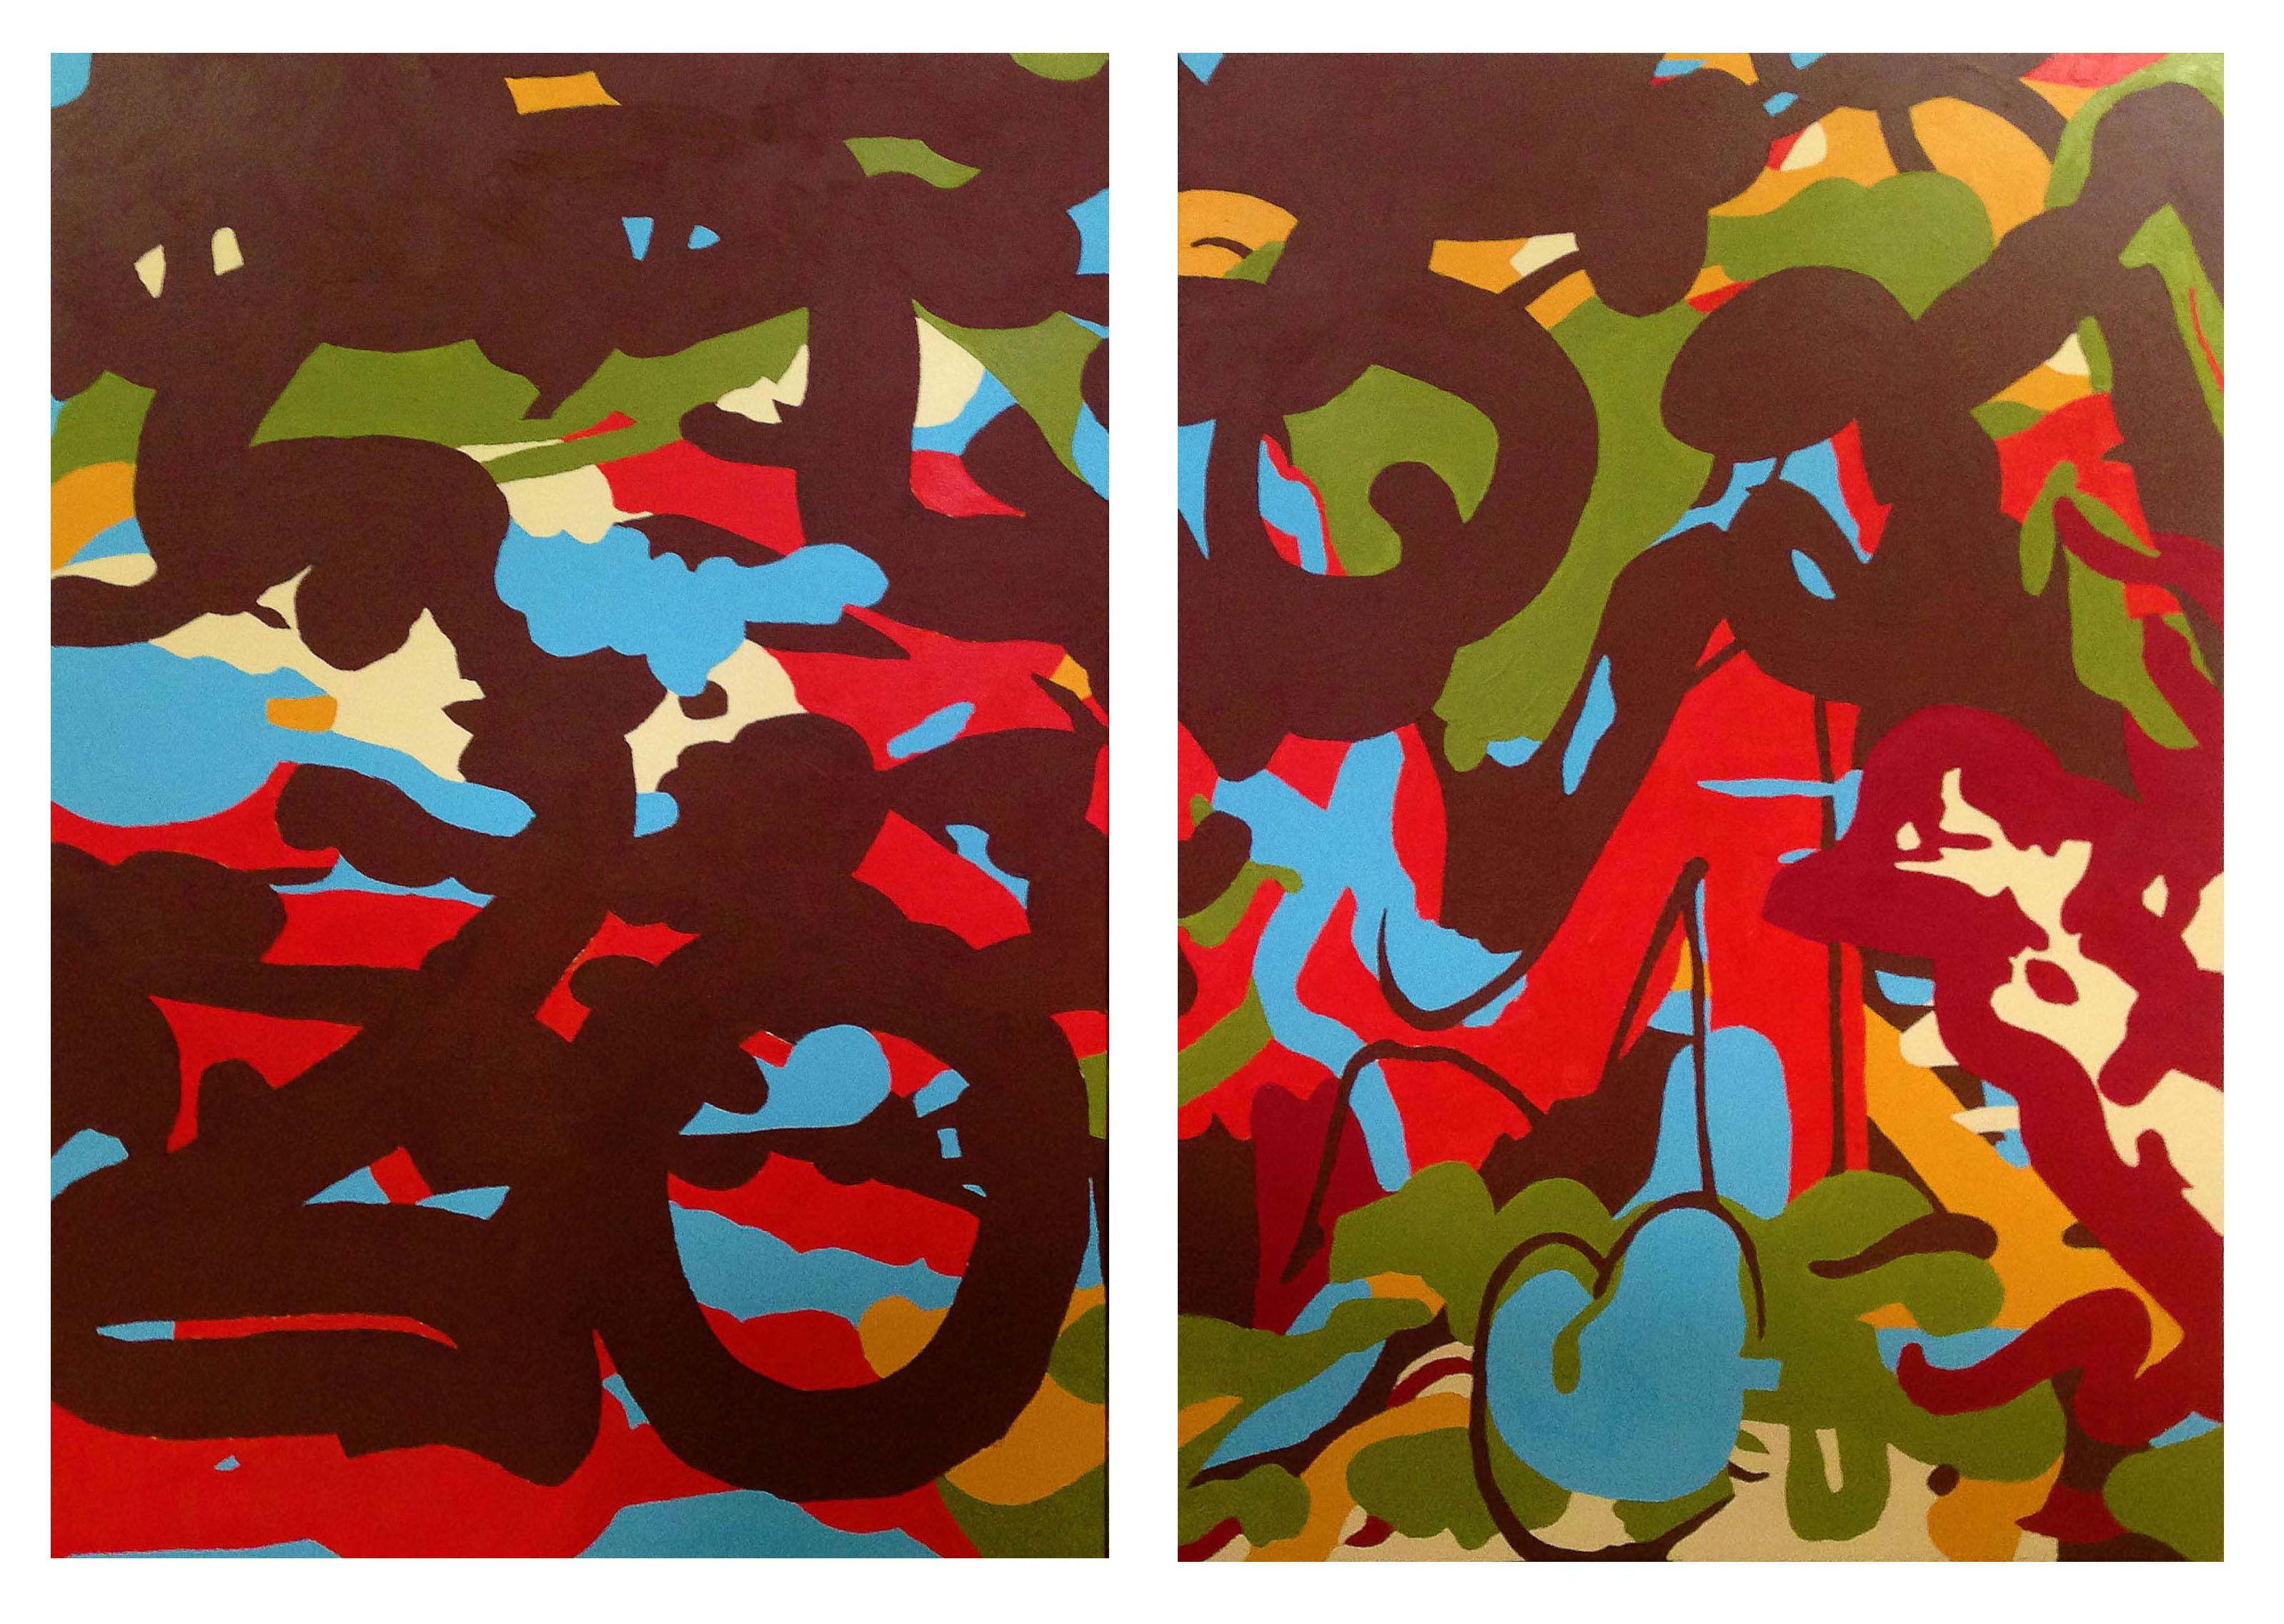 Abstract Painting Paweł Myszka - Diptyque -  « Sympathie for The Strawberry » - Joyful, Expression, Pop, Street Art